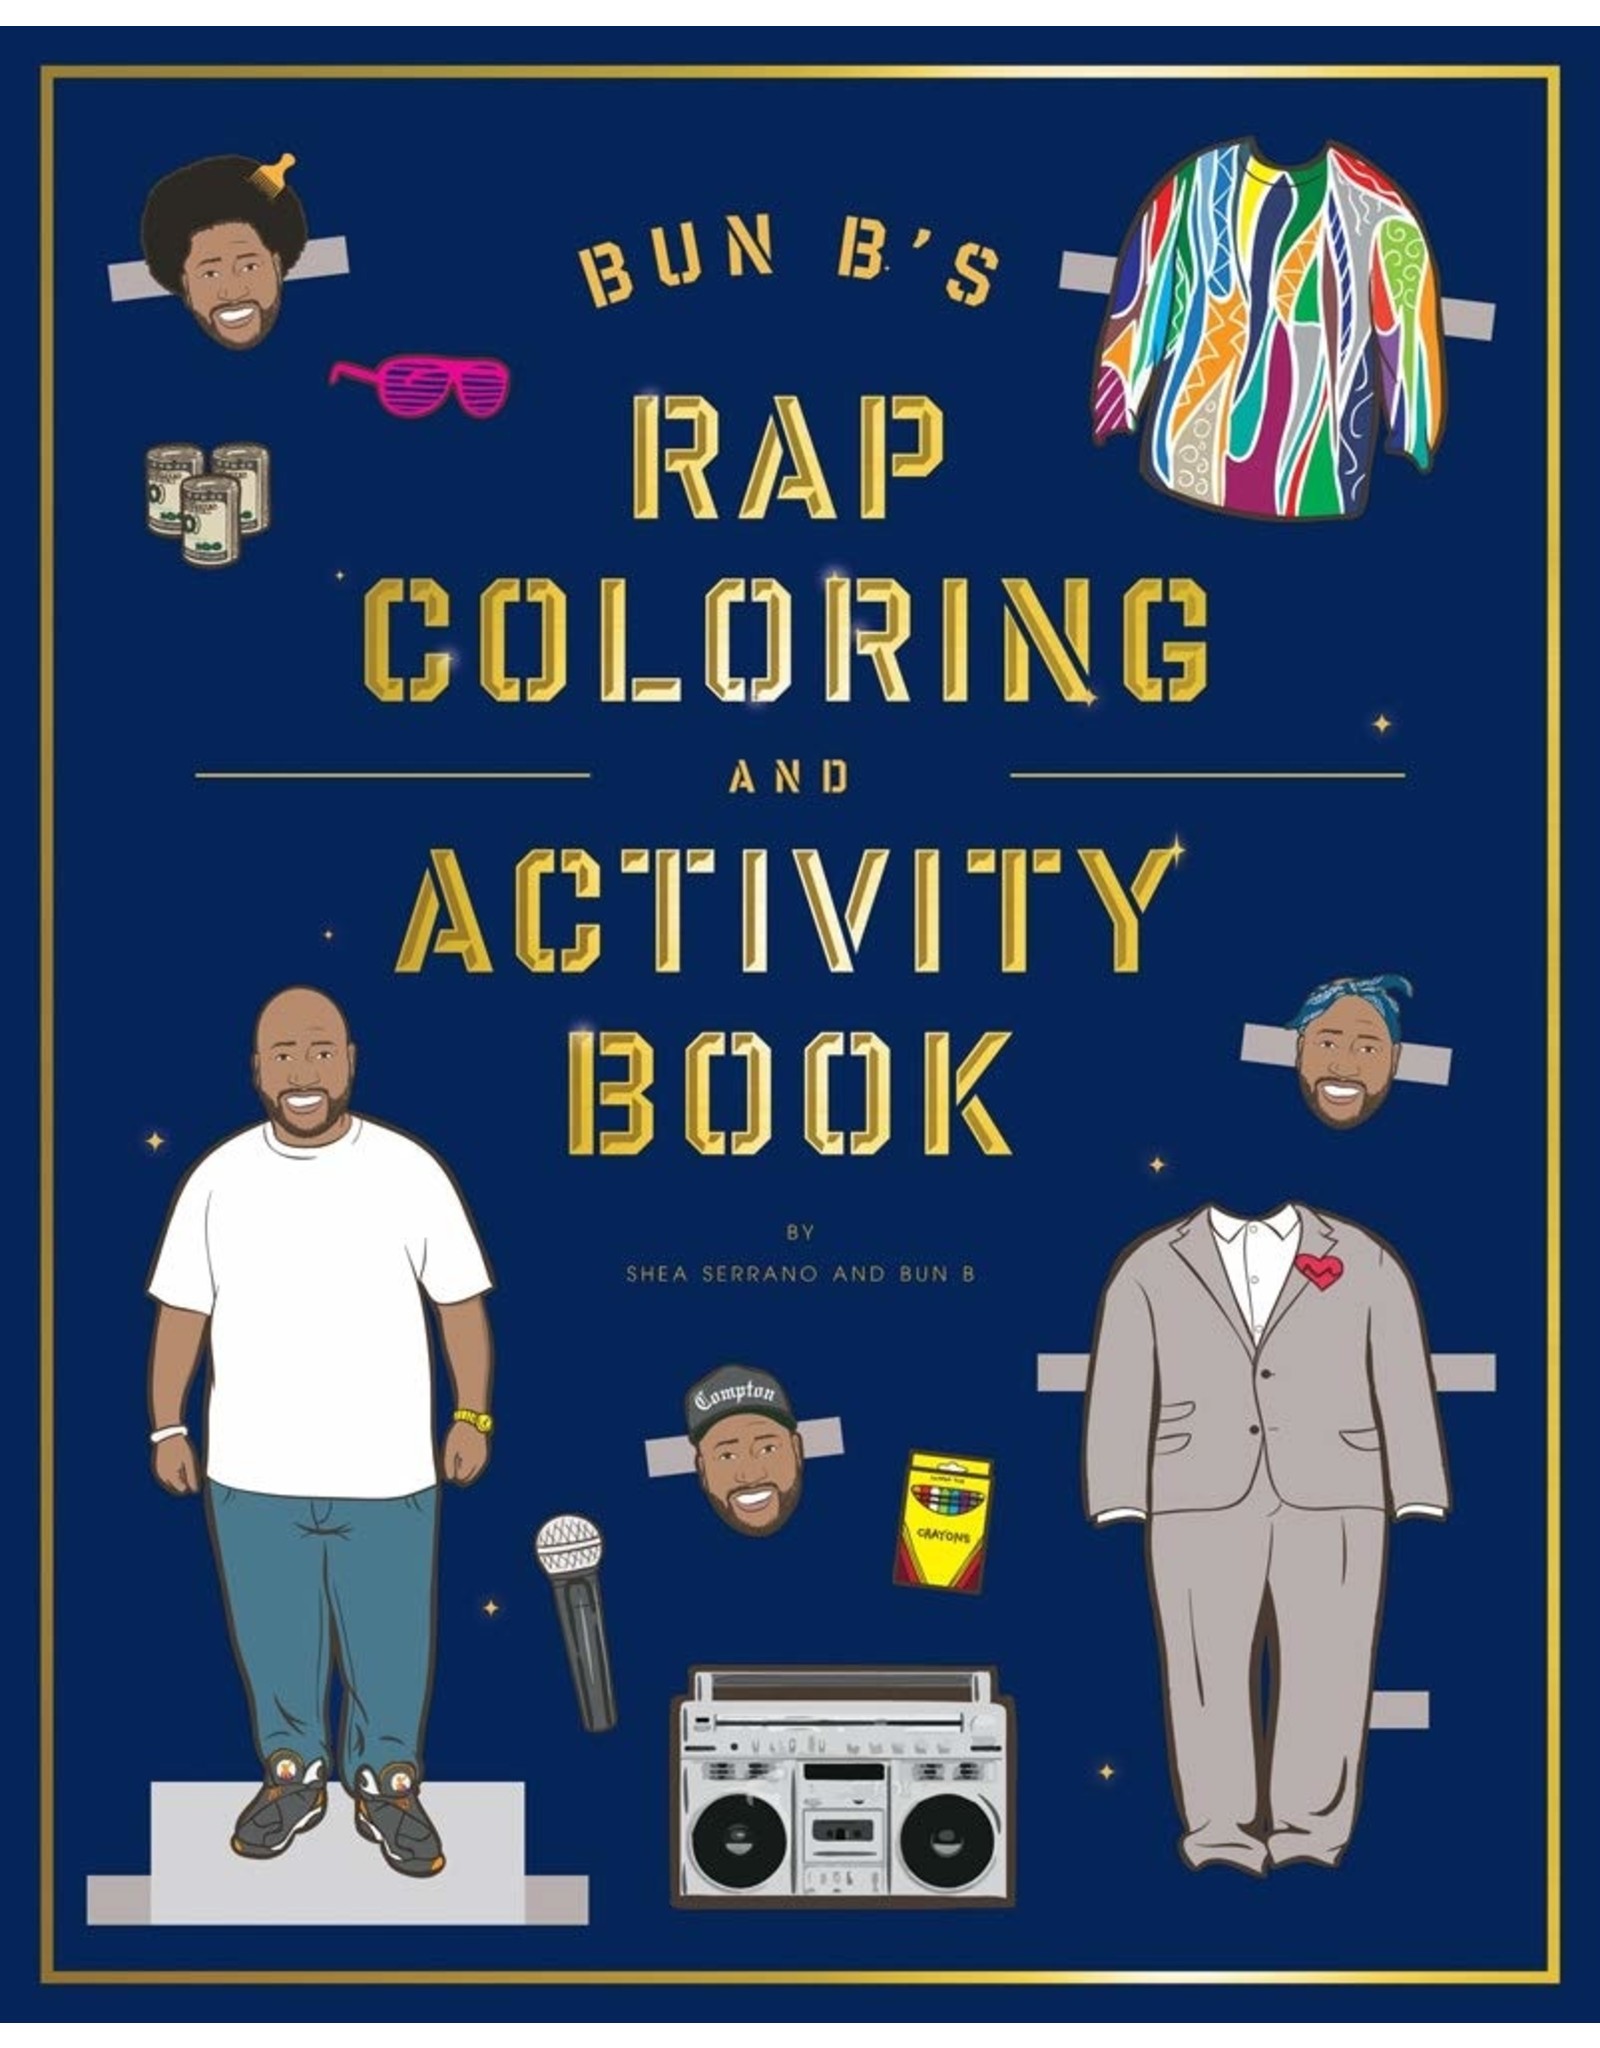 Literature Bun B's Rapper Coloring and Activity Book